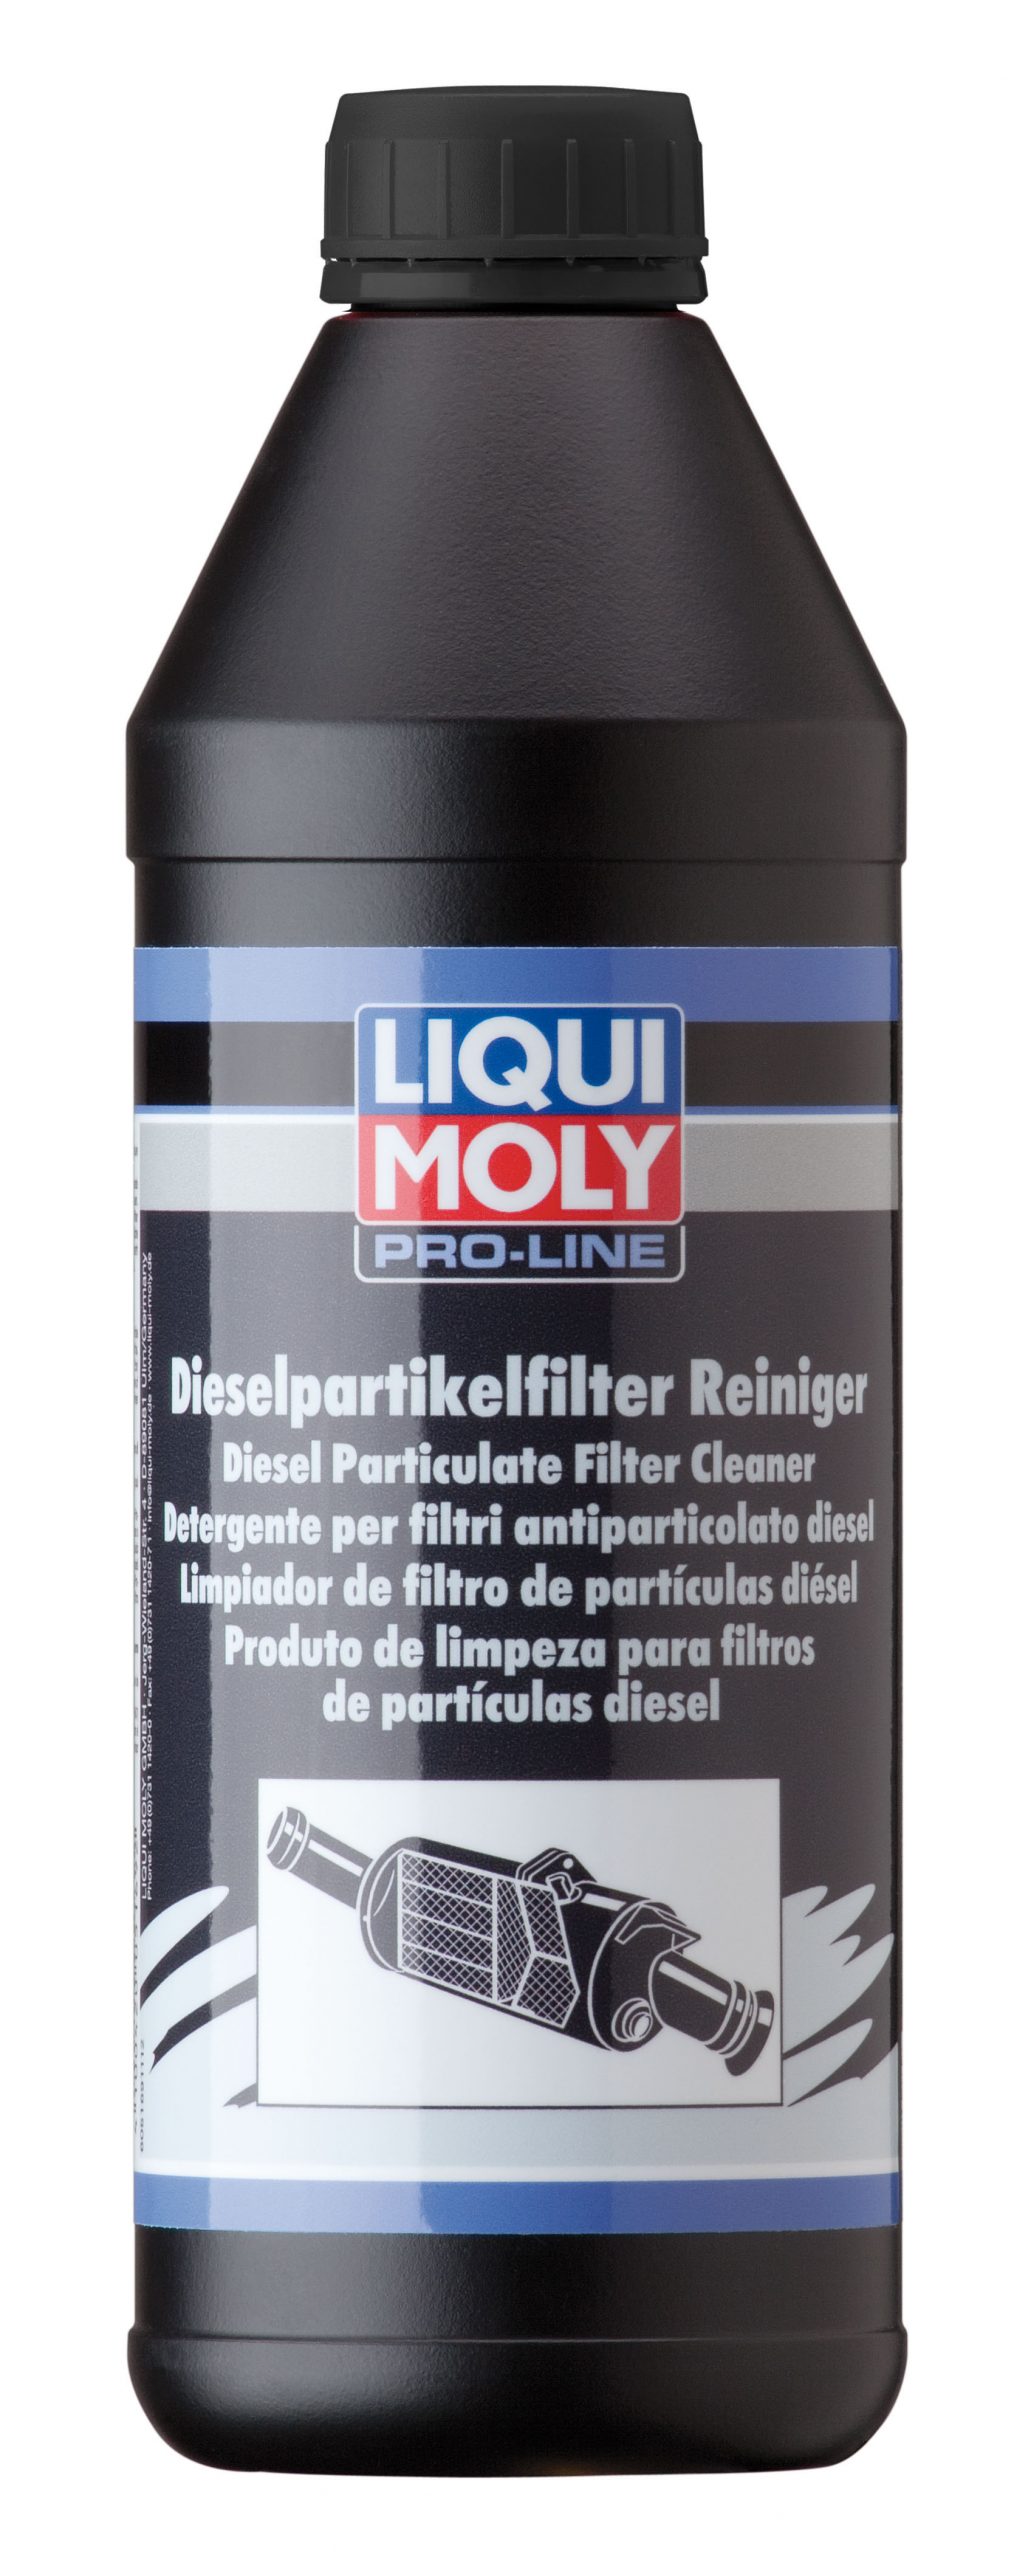 Pro-line DPF reiniger (5169) - Liqui Moly webshop